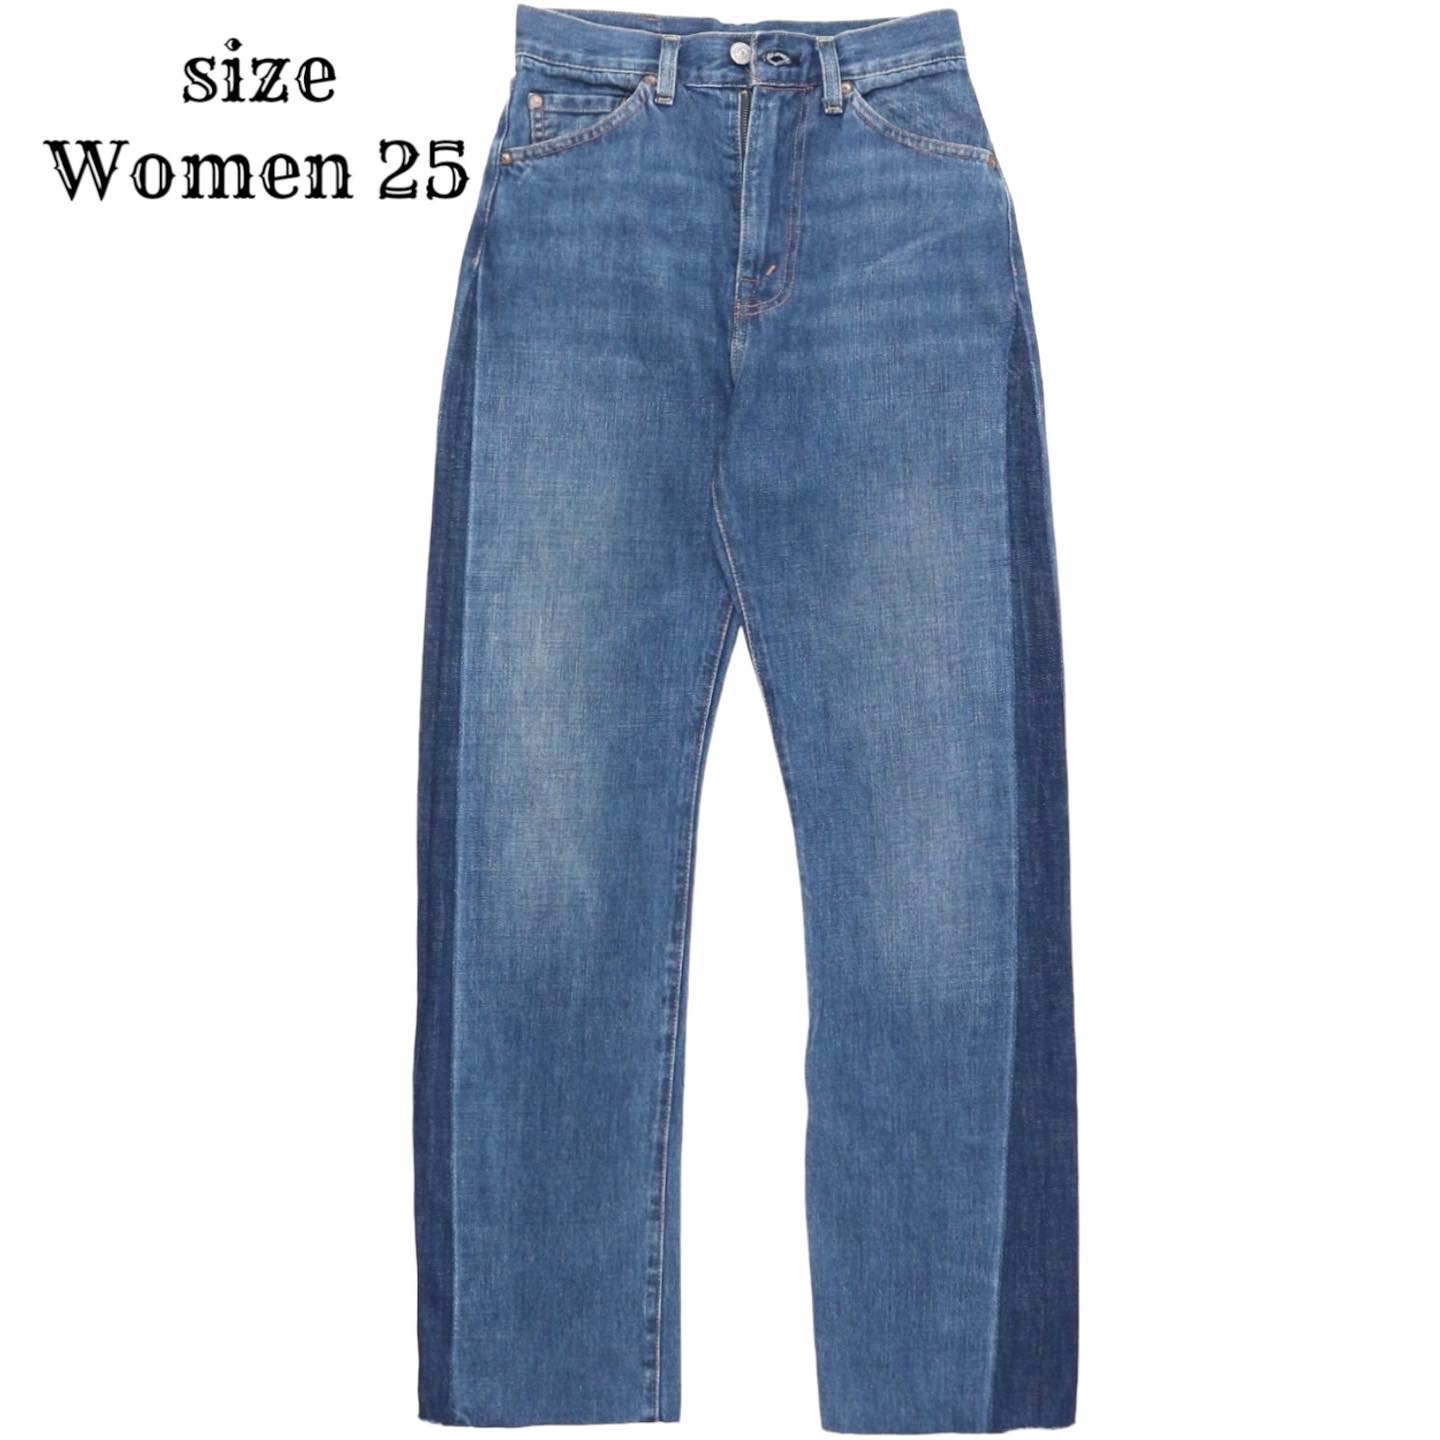 LEVI’S VINTAGE CLOTHING 701 Women Selvedge Jeans Size 25